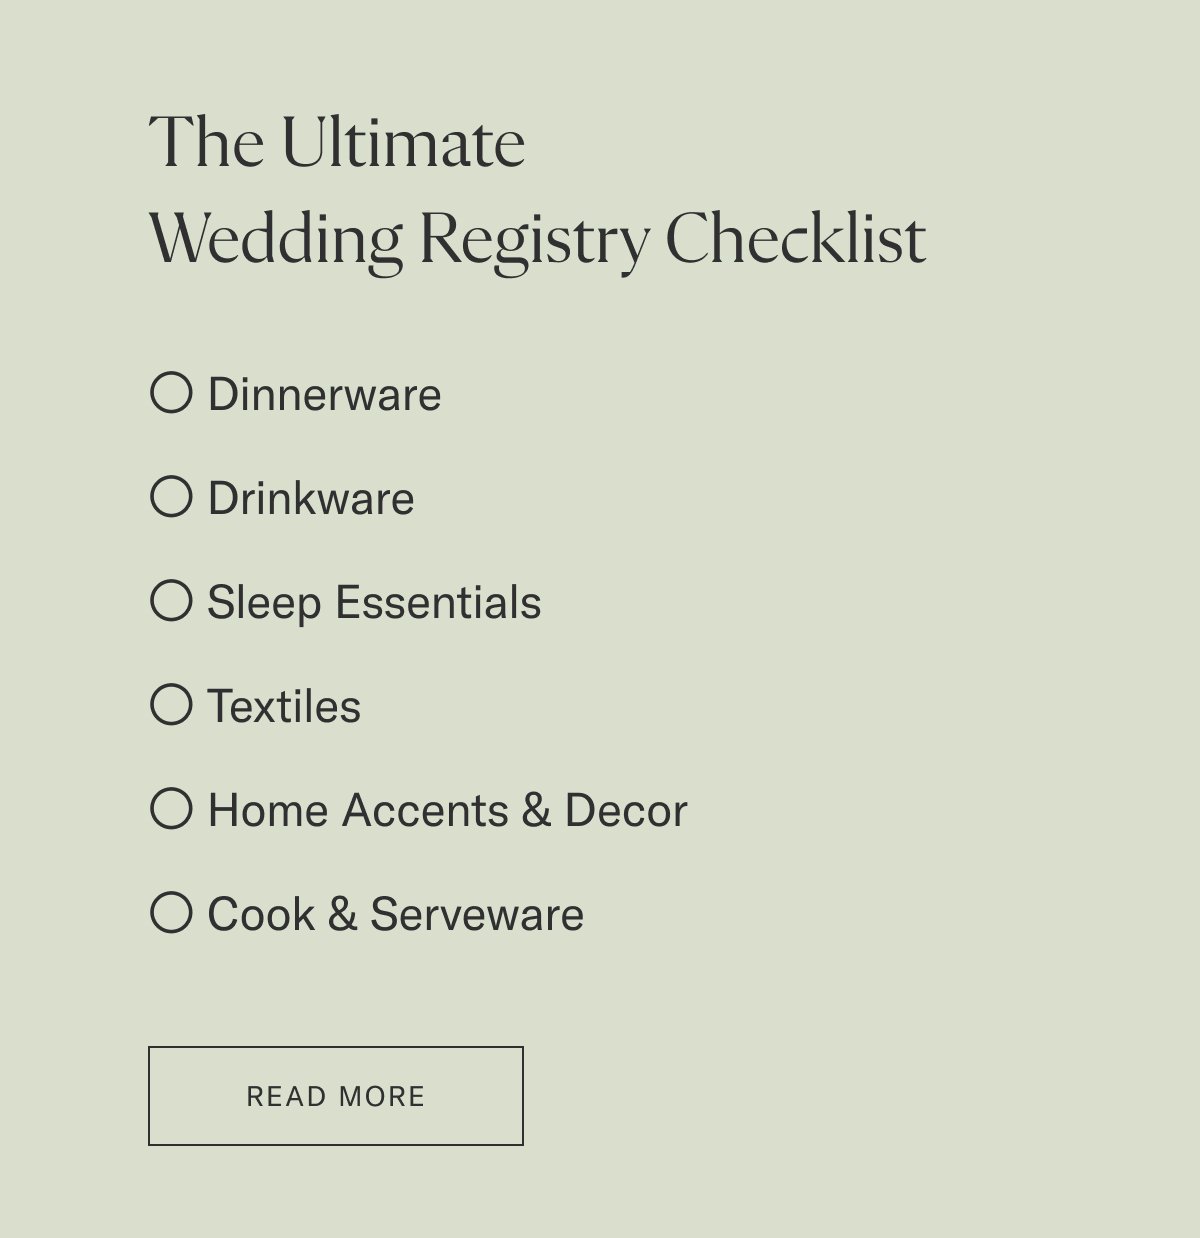 The ultimate wedding registry checklist